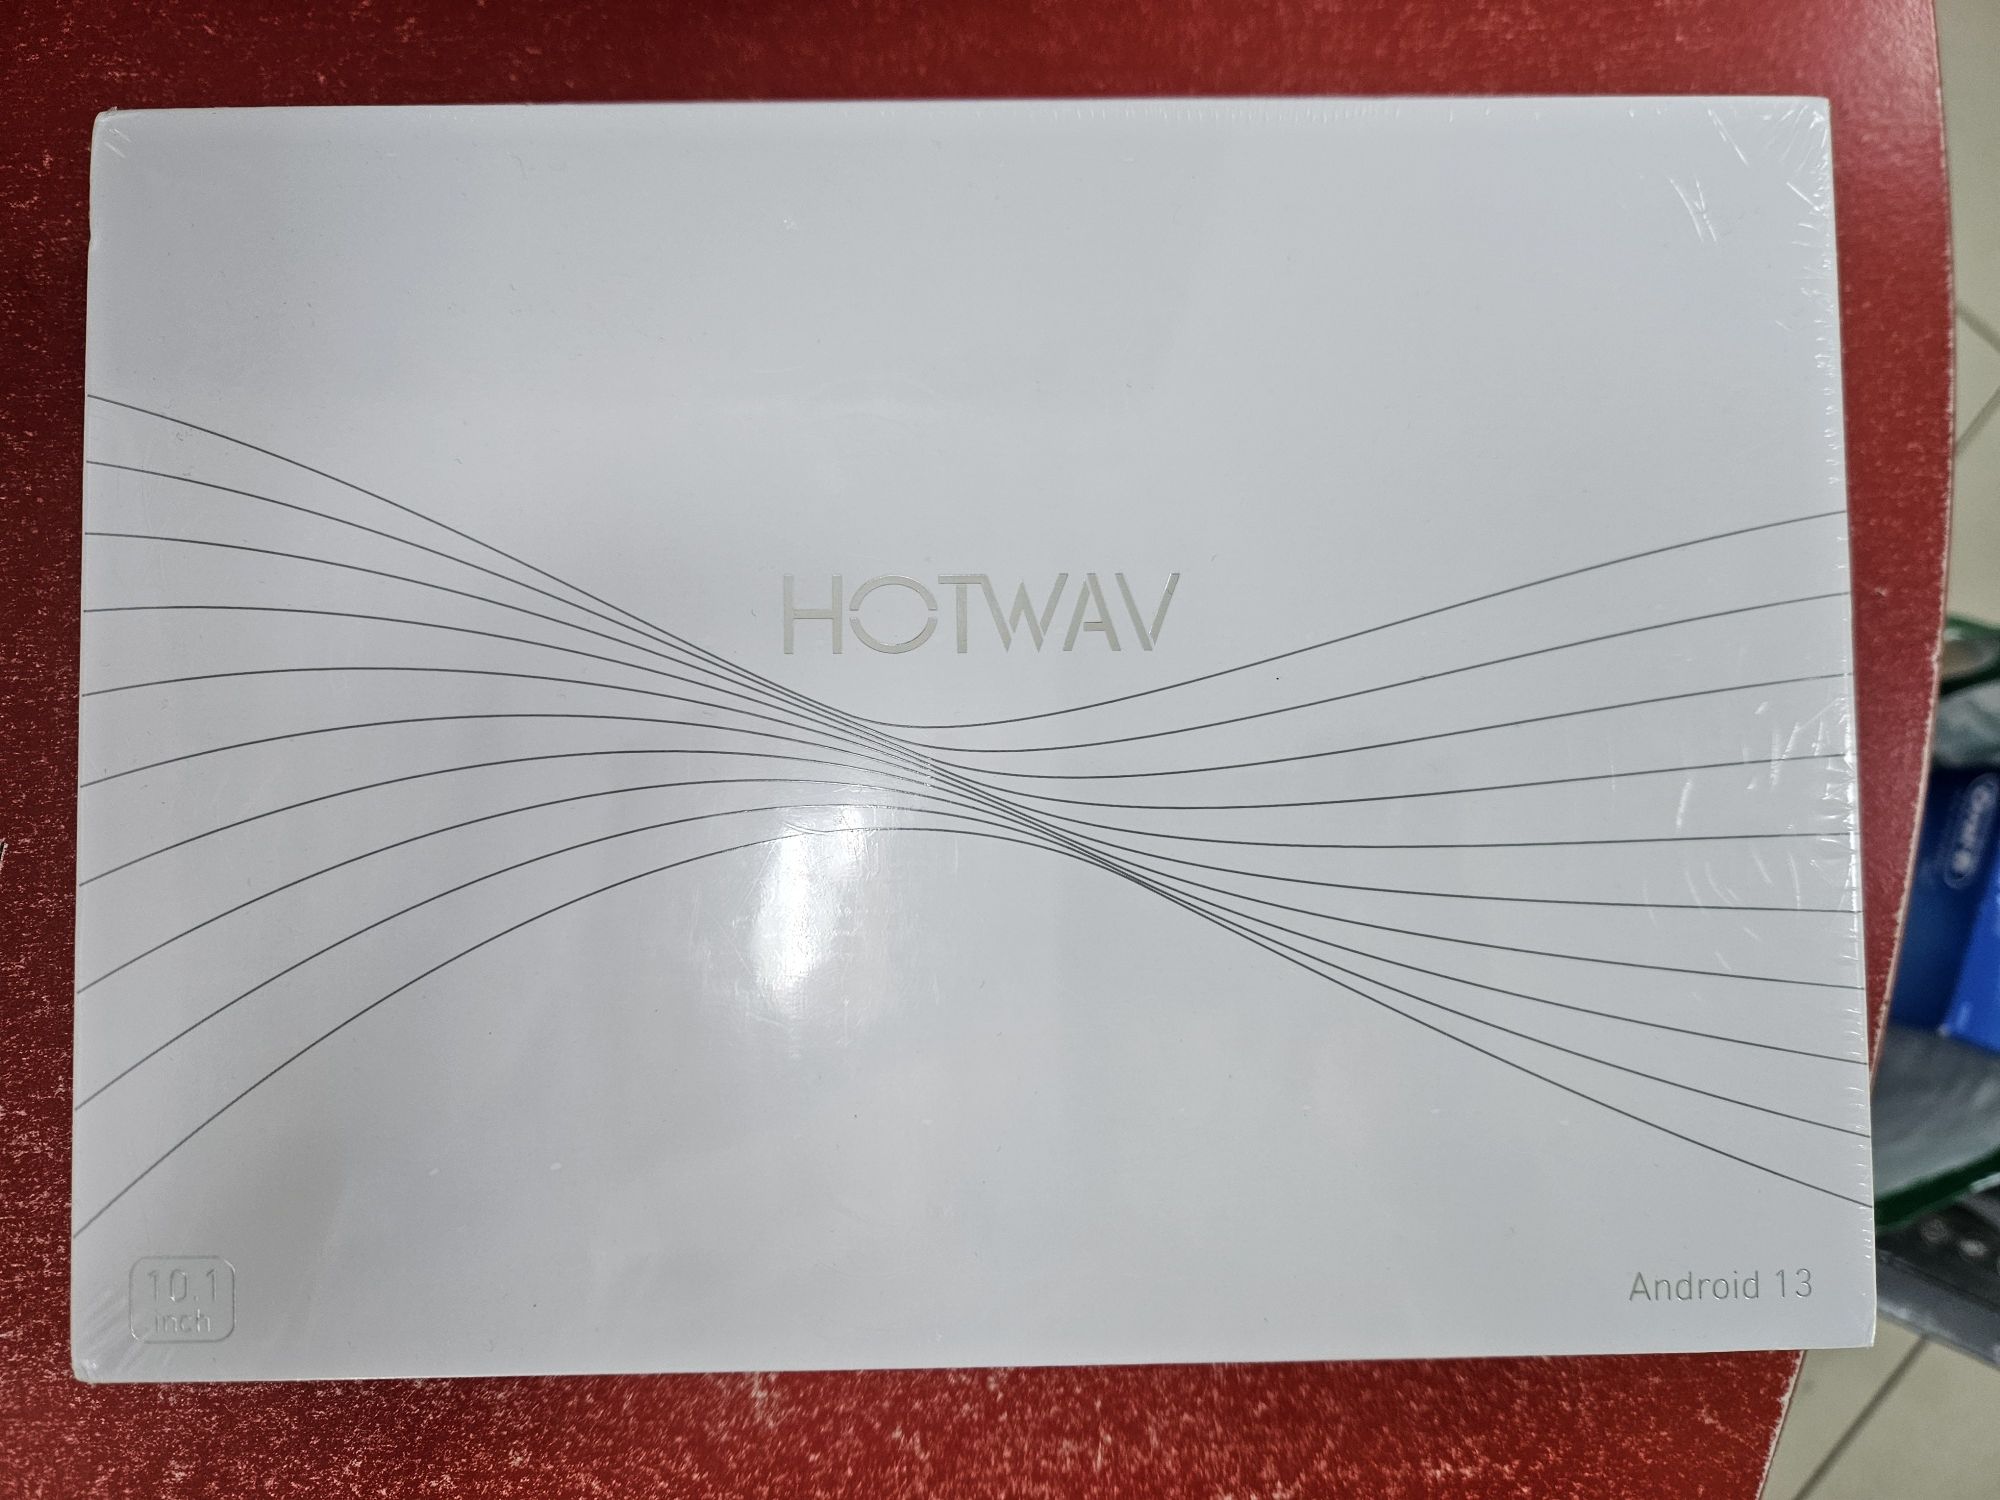 Пиле-волого захищений планшет Hotwav Tab R7 6/256Gb Vitality Orange